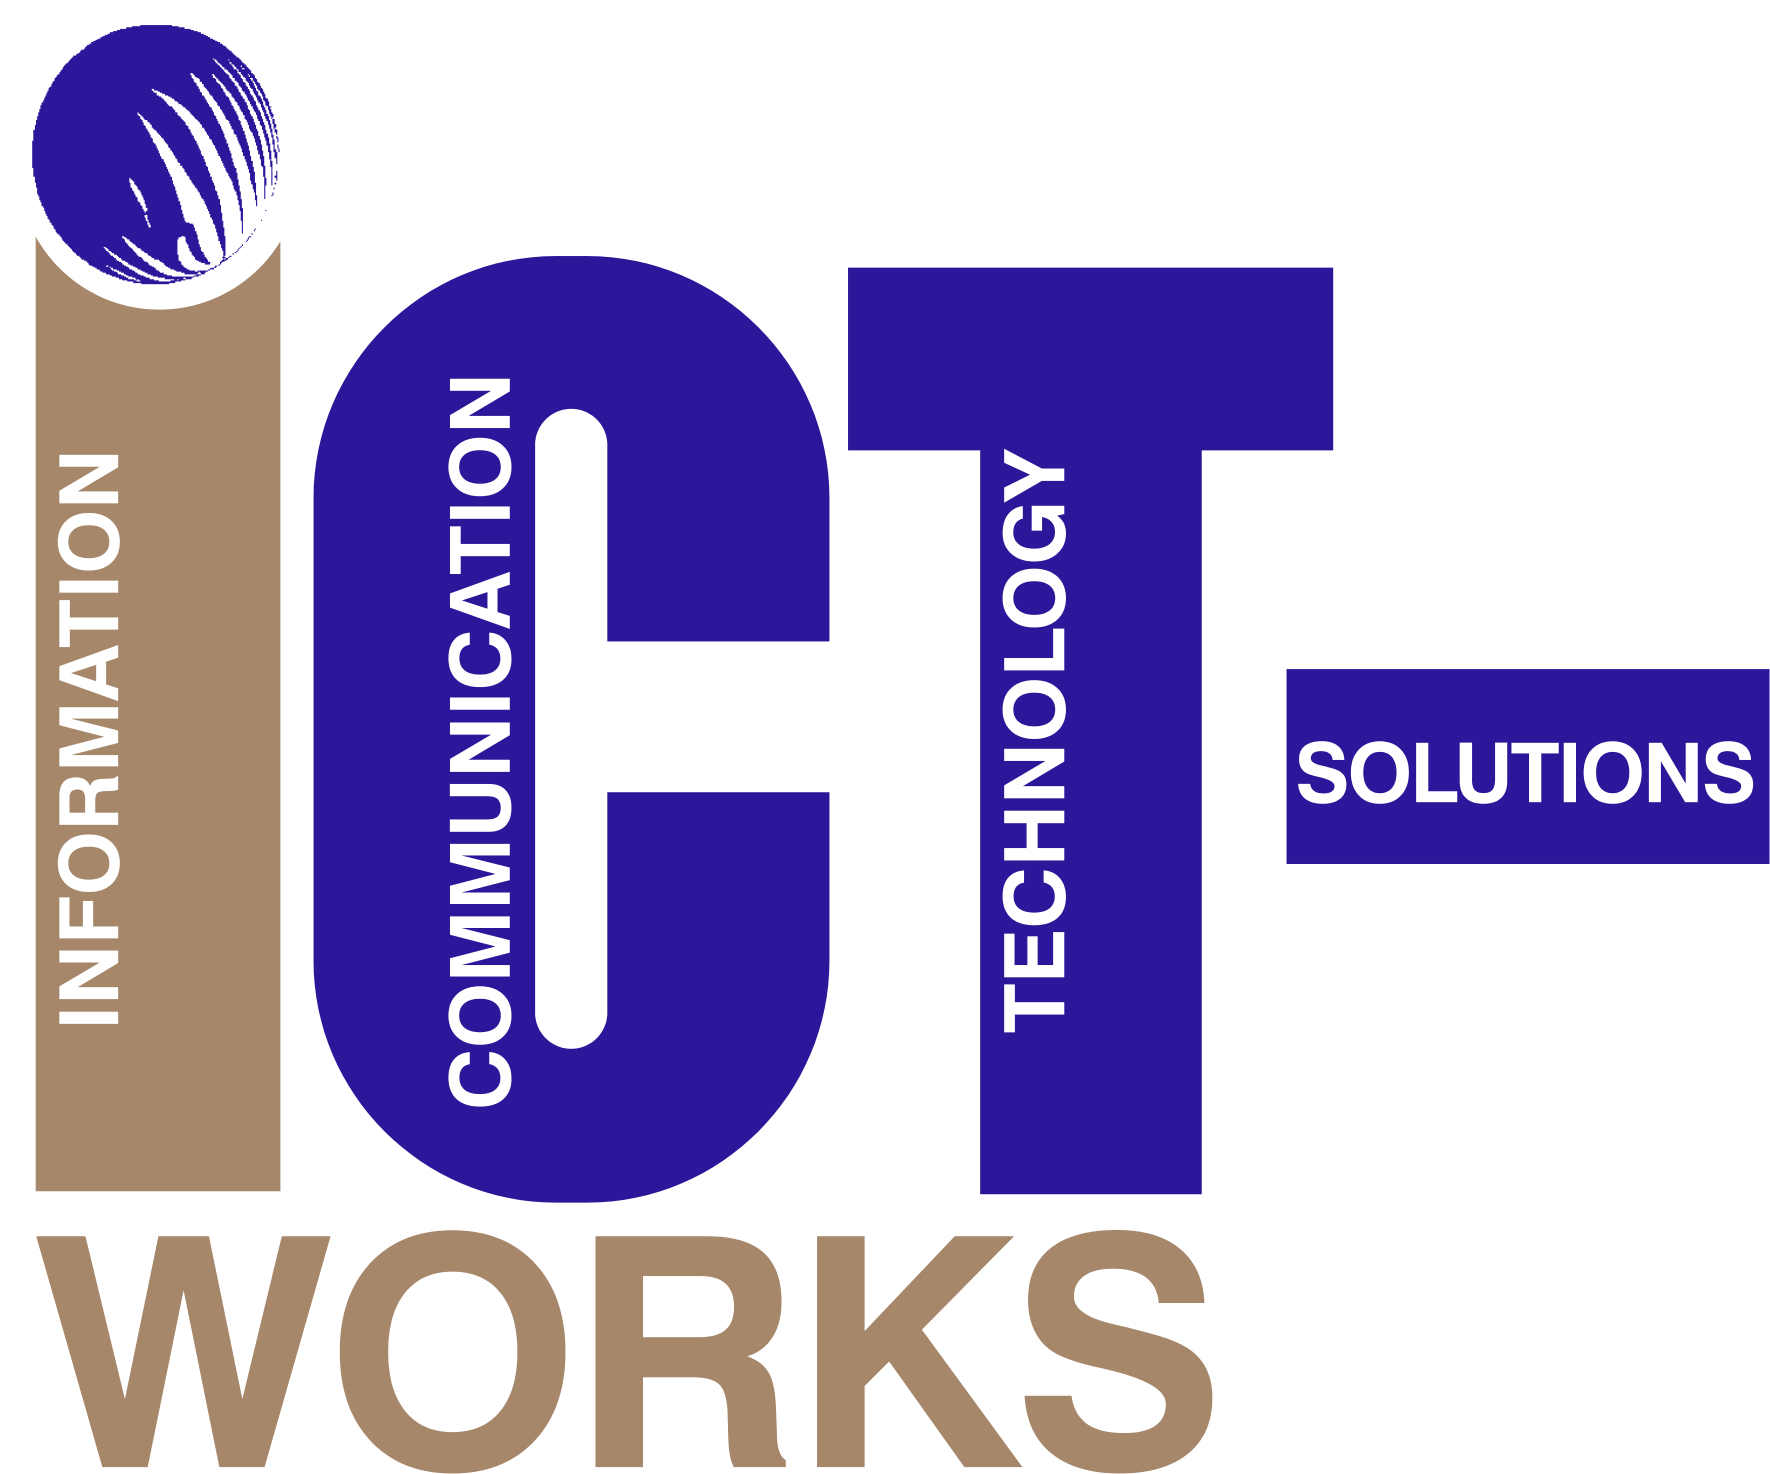 Communication technology ltd. ICT. ICT картинки. Information and communications Technology. Логотип ICT.